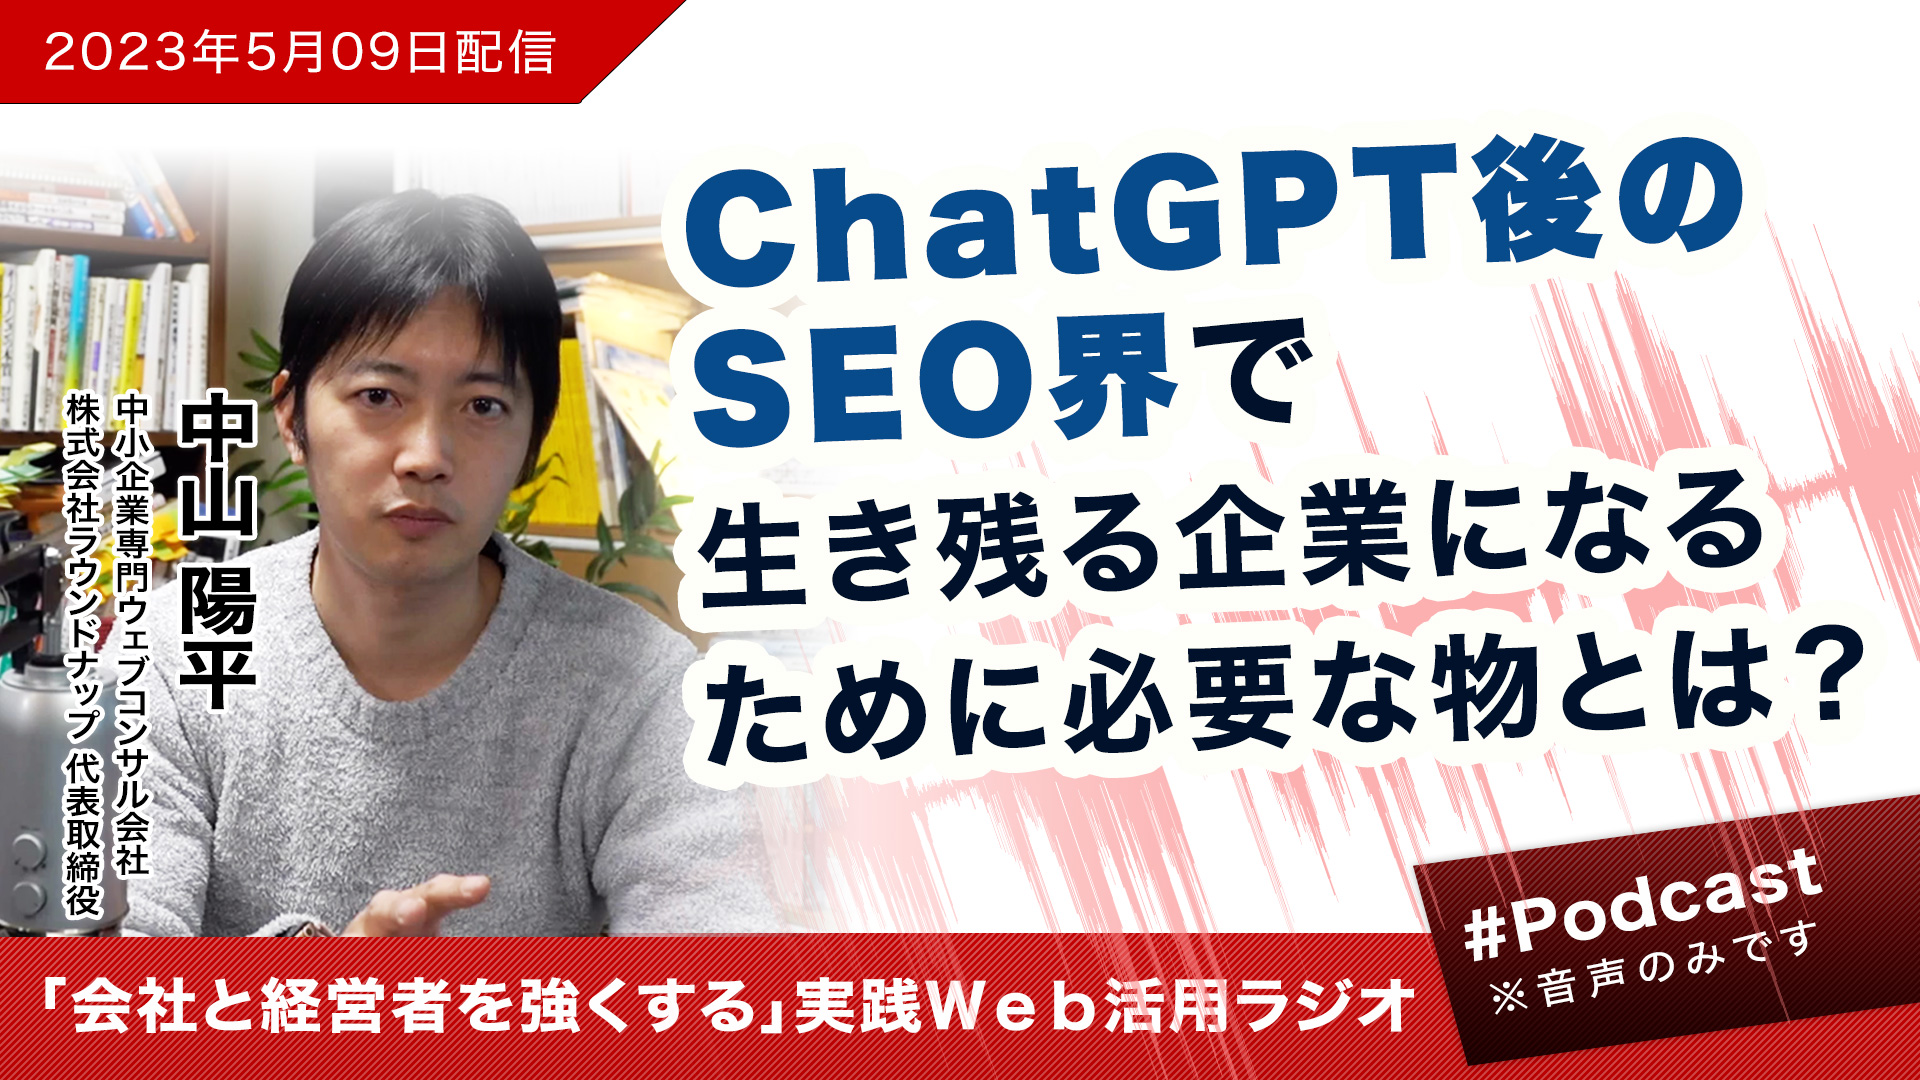 [23/05/09]ChatGPT後のSEO界で生き残る企業に必要な要素とは？